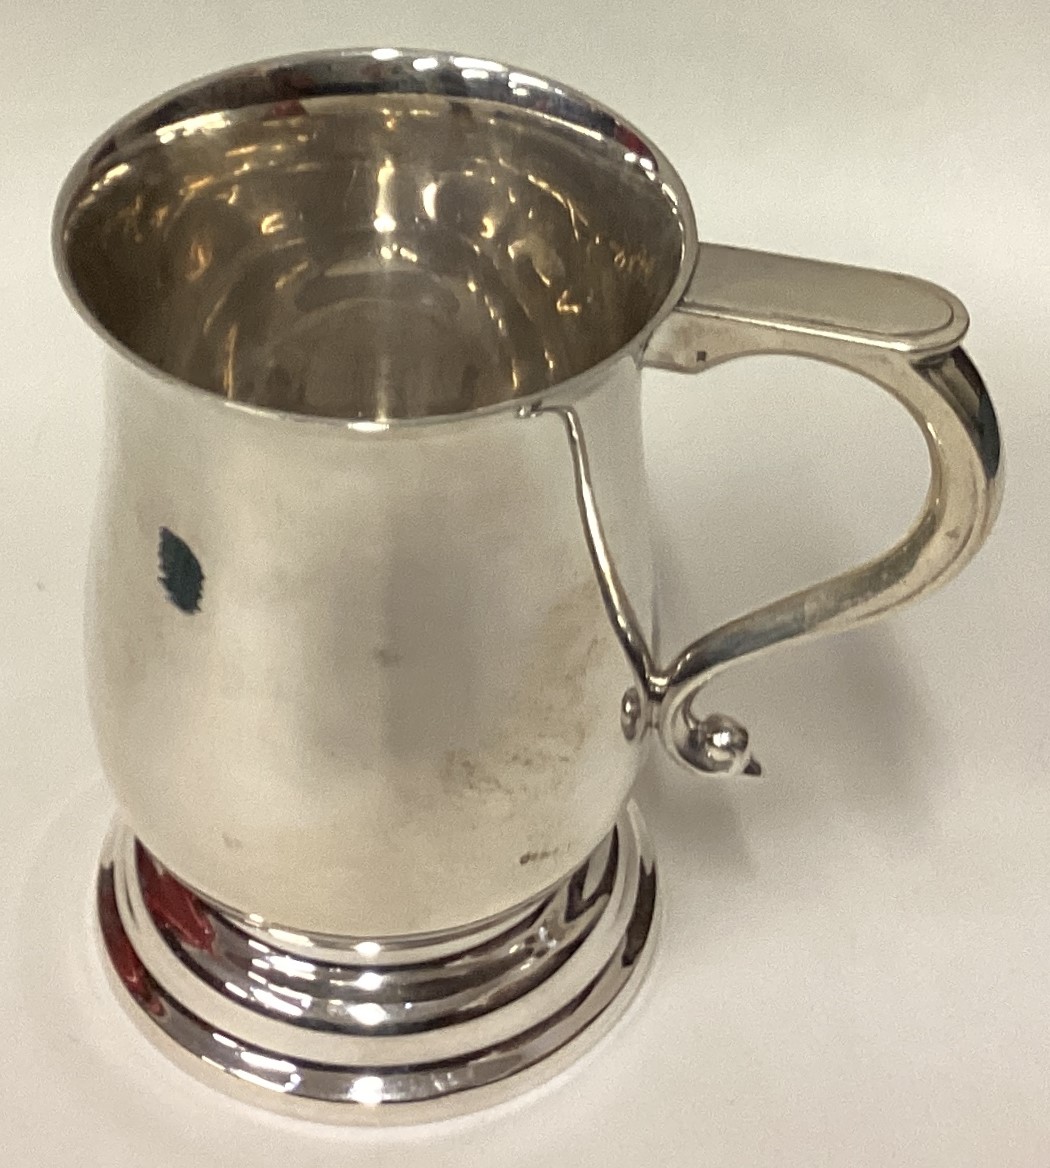 A large silver pint mug in the Georgian style.